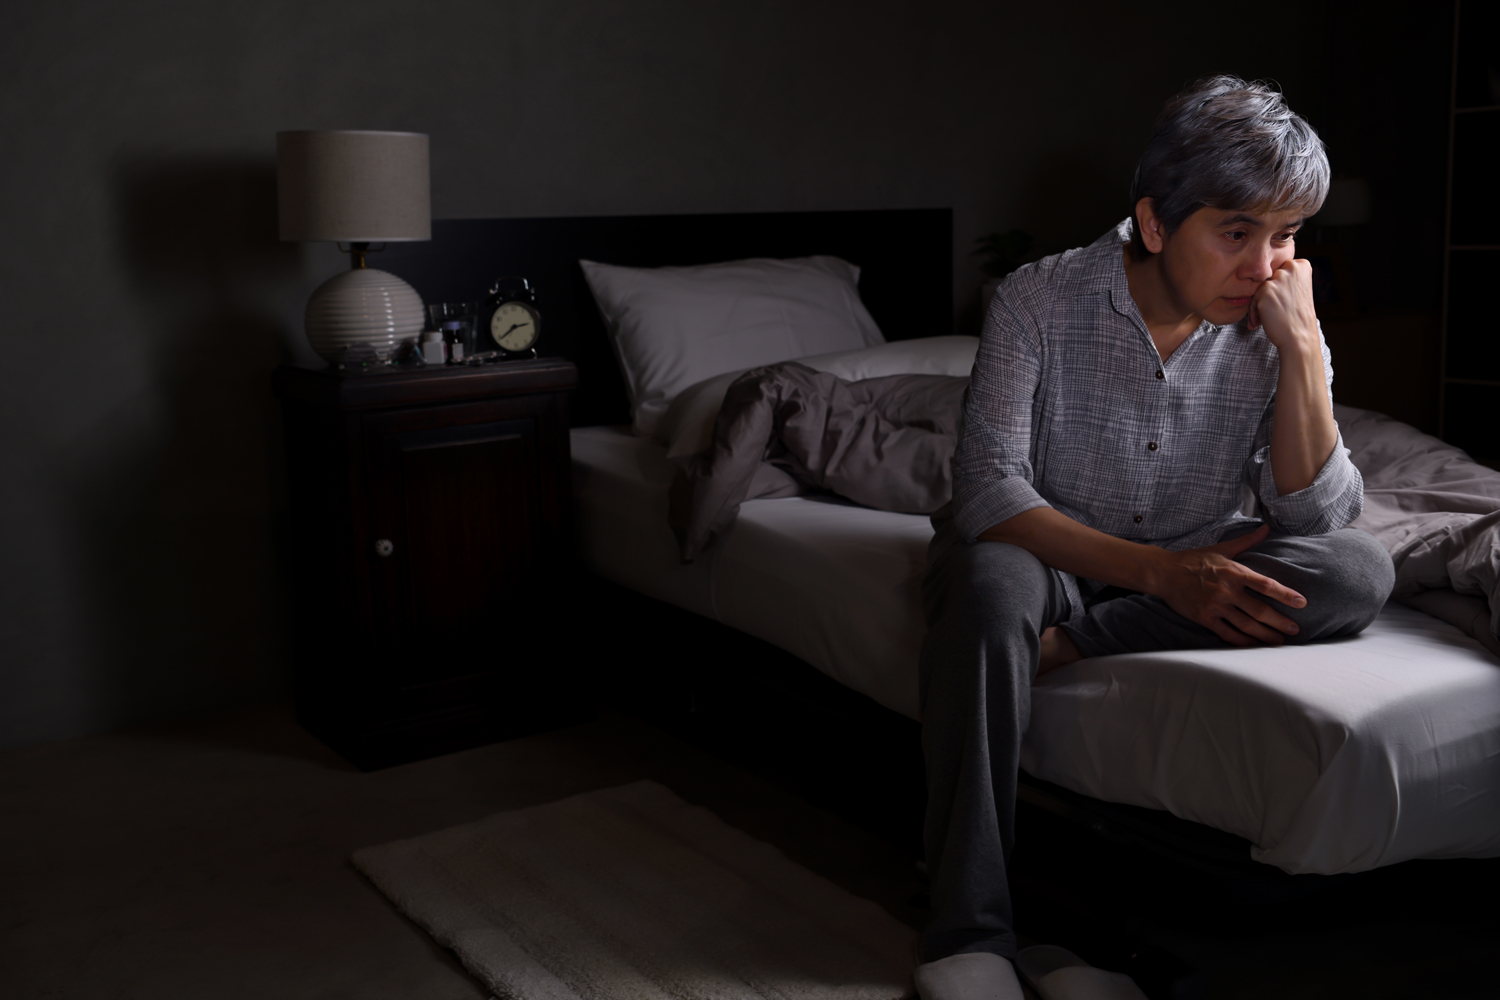 How do I address insomnia after cancer treatment?